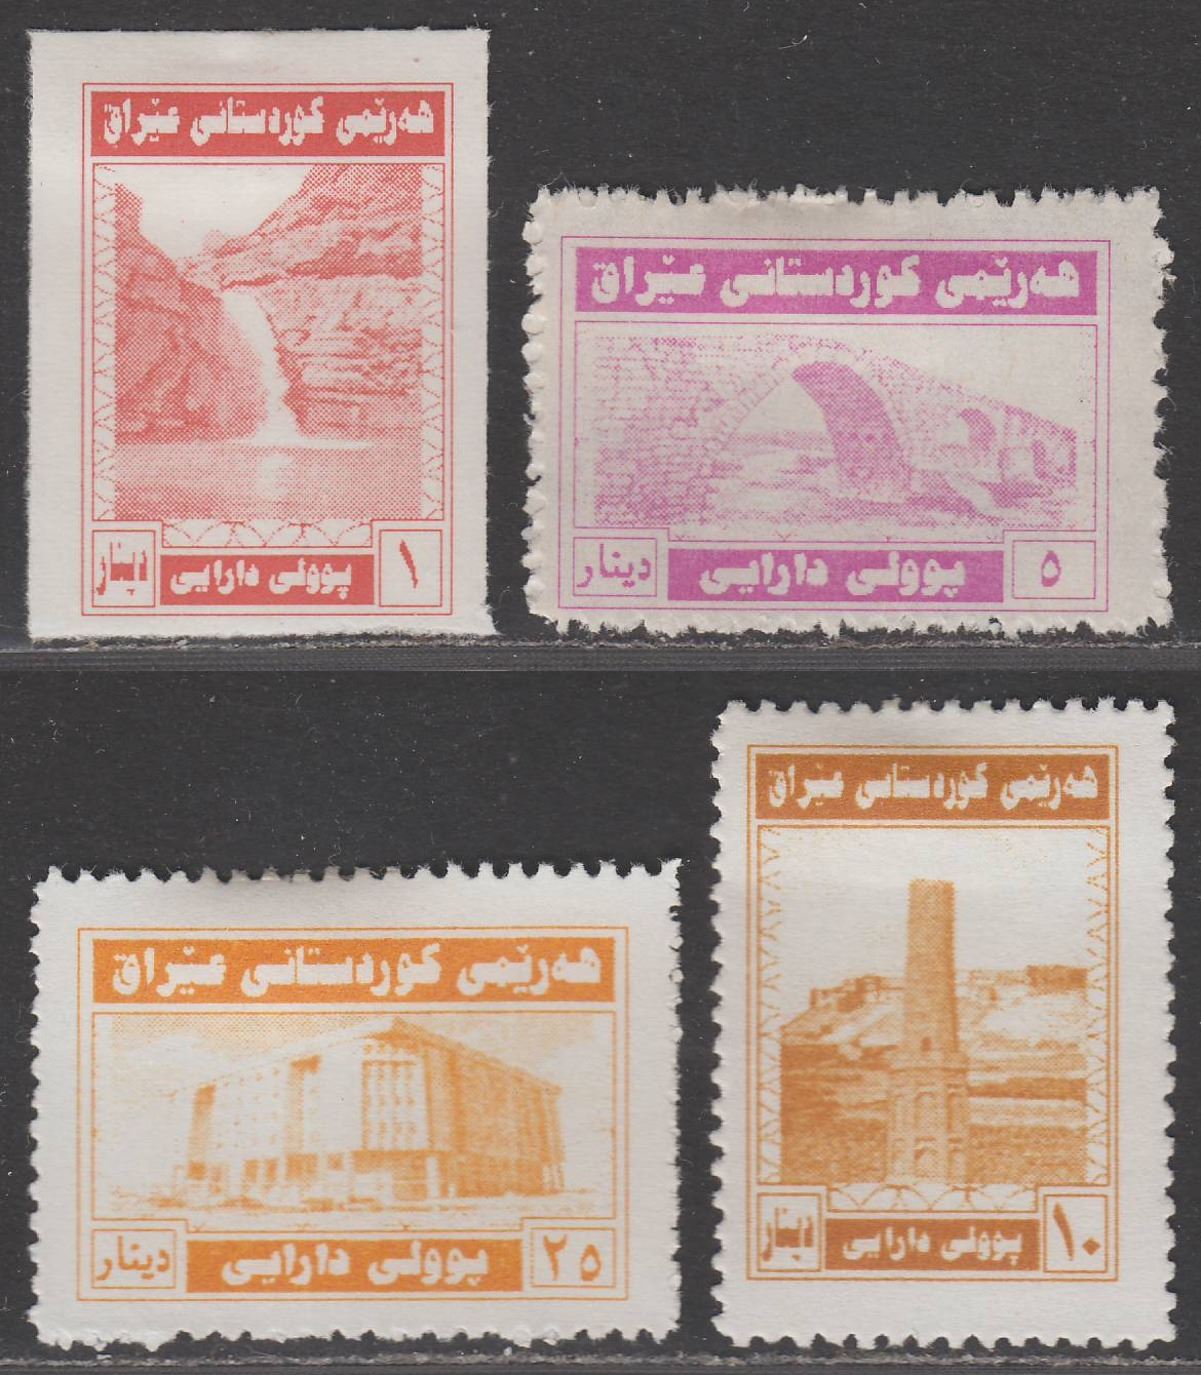 Iraq Kurdistan Region 1999? Revenue Stamps Mostly Unused